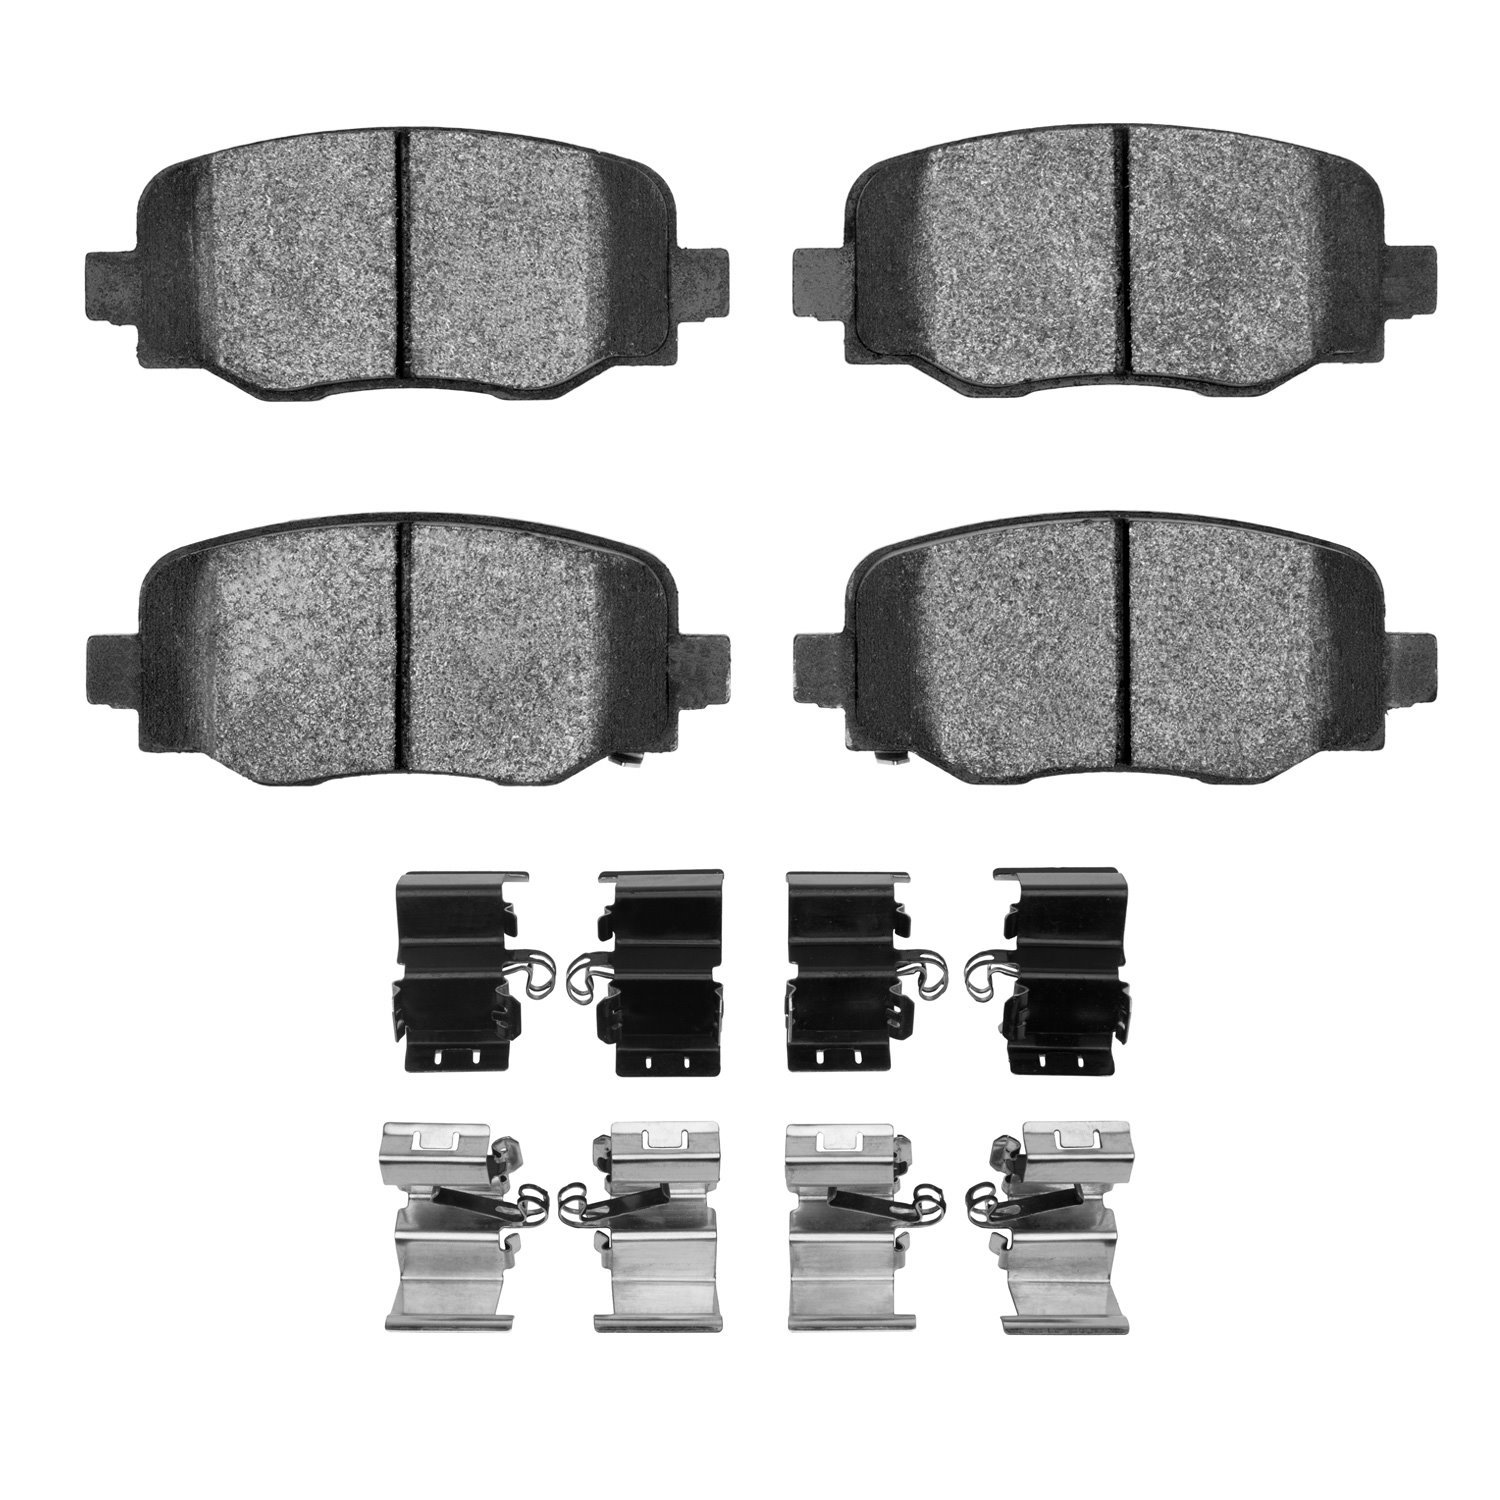 1600-1809-01 5000 Euro Ceramic Brake Pads & Hardware Kit, Fits Select Mopar, Position: Rear